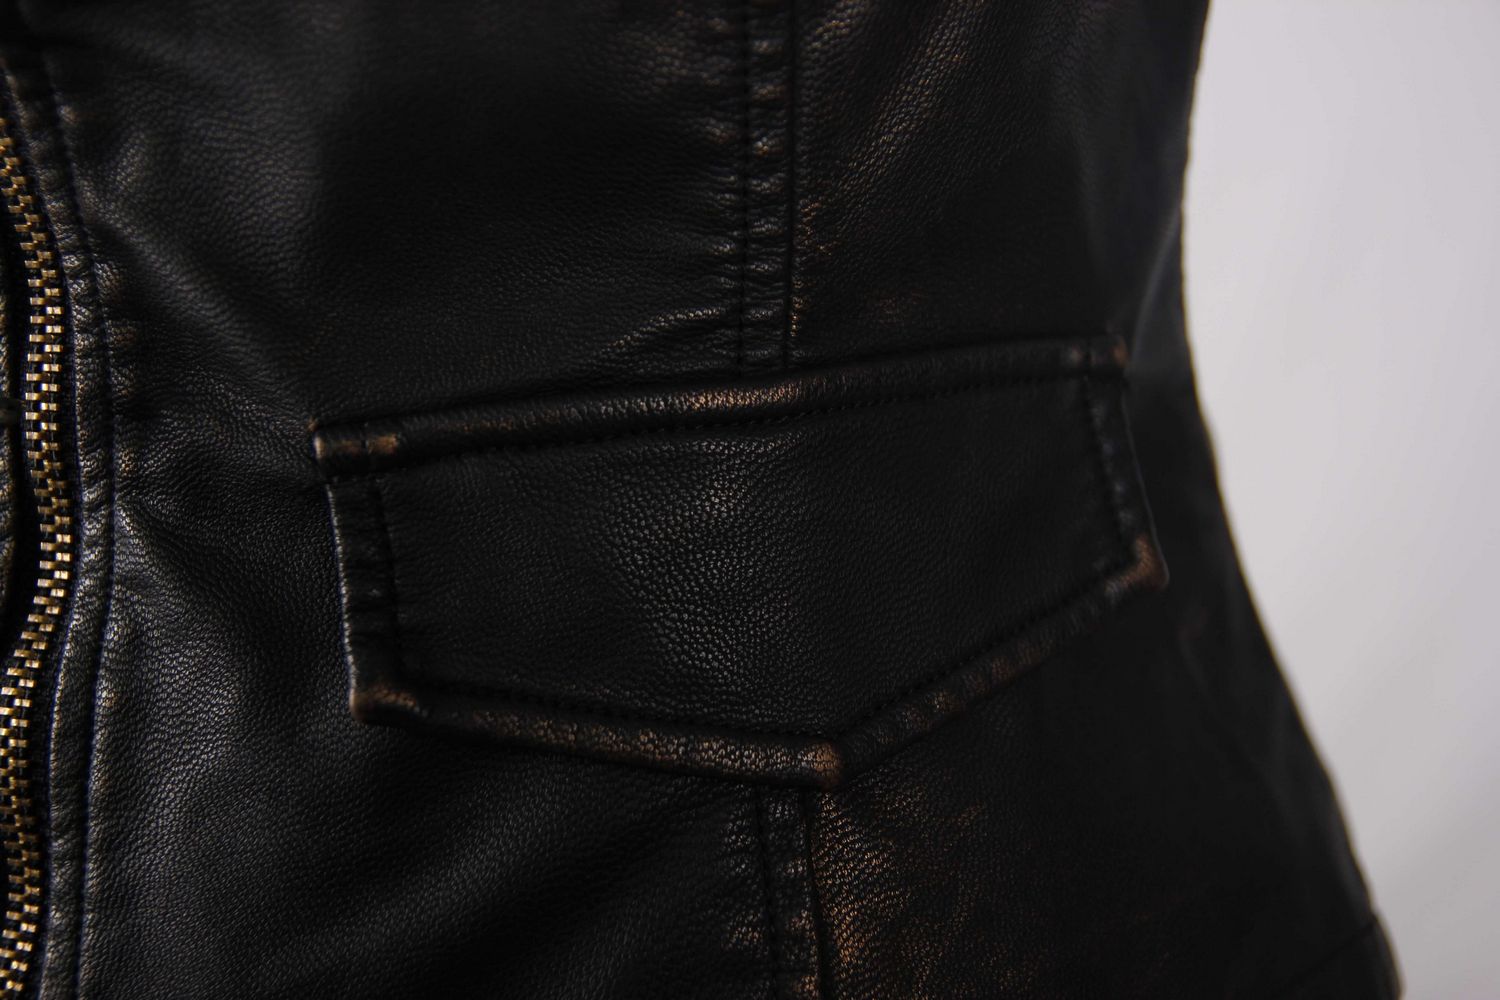 Stylish Women's Steampunk PU Leather Waistcoat With Leather Frills / Female Alternative Clothing